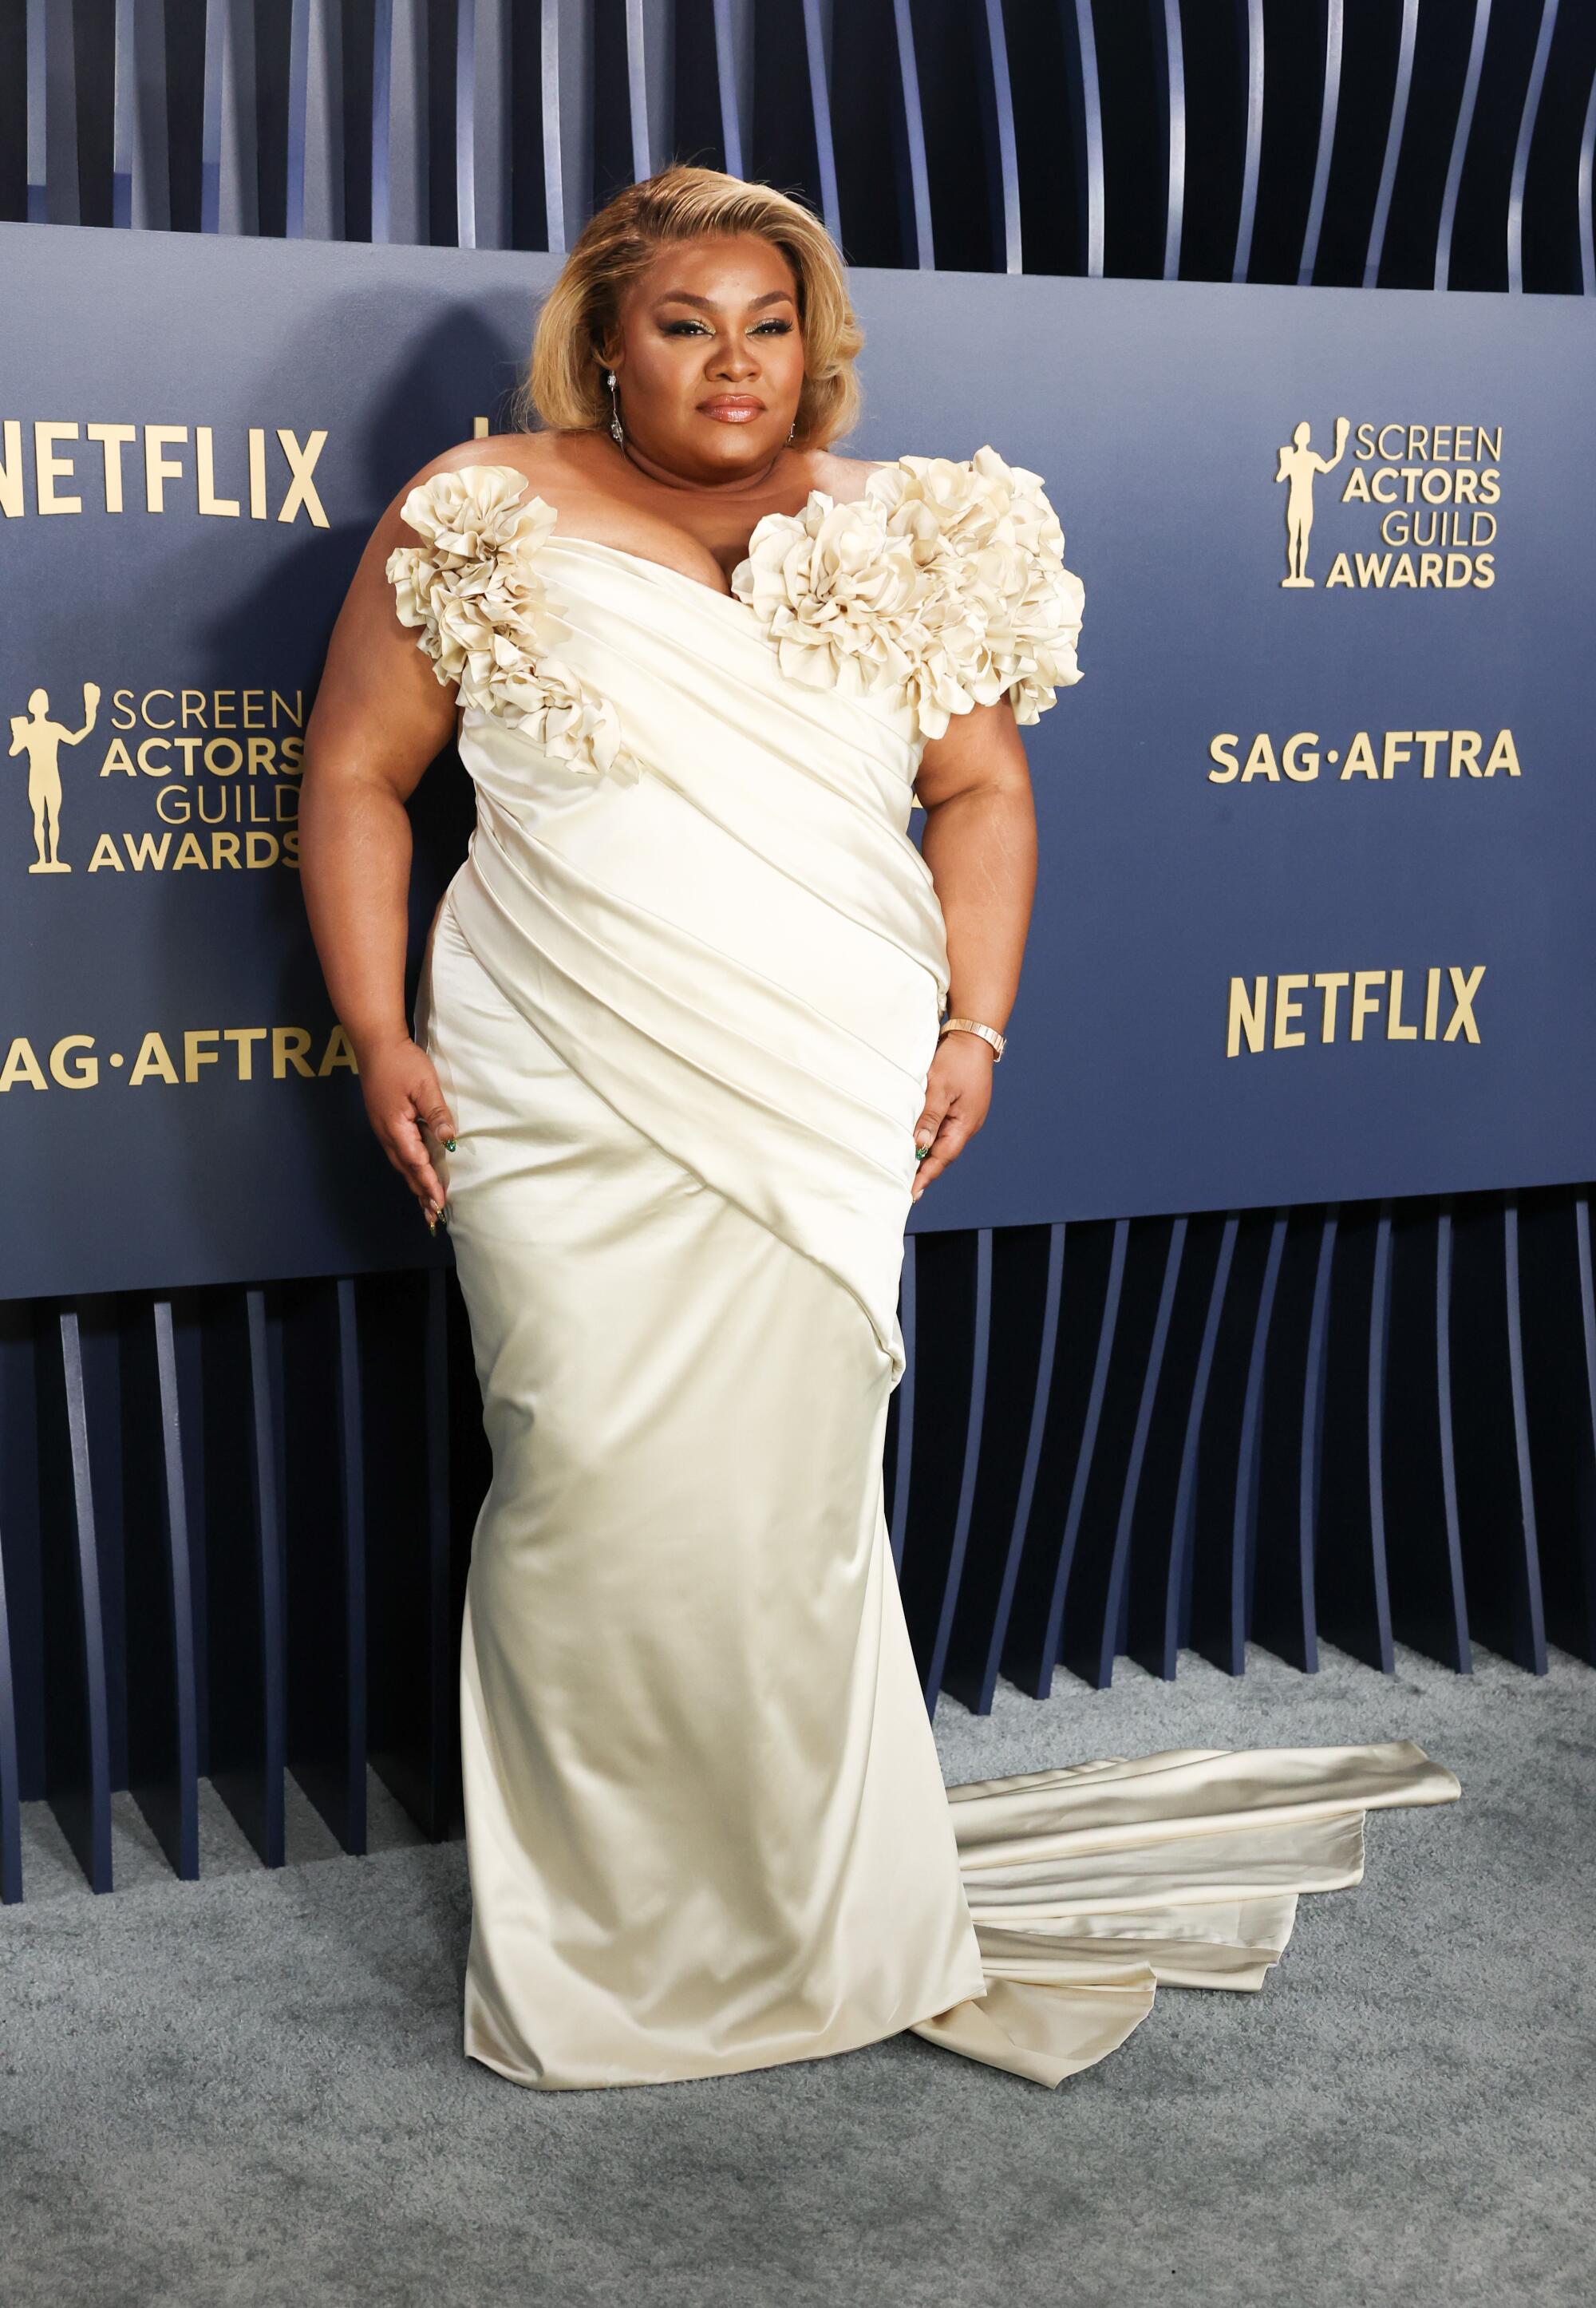 Da'Vine Joy Randolph wears a white dress at the SAG Awards.